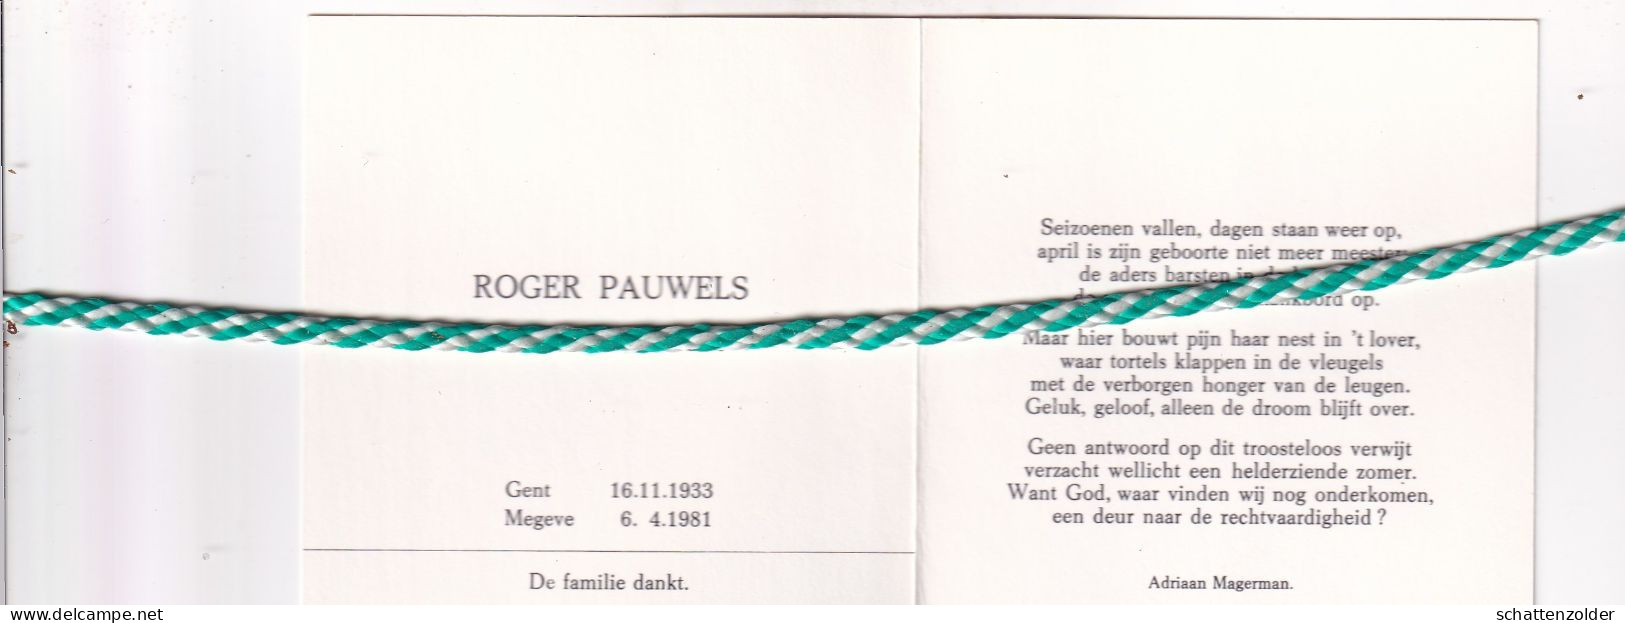 Roger Pauwels (Artiestennaam Paul Rutger), Gent 1933, Megeve 1981. Organist - Obituary Notices